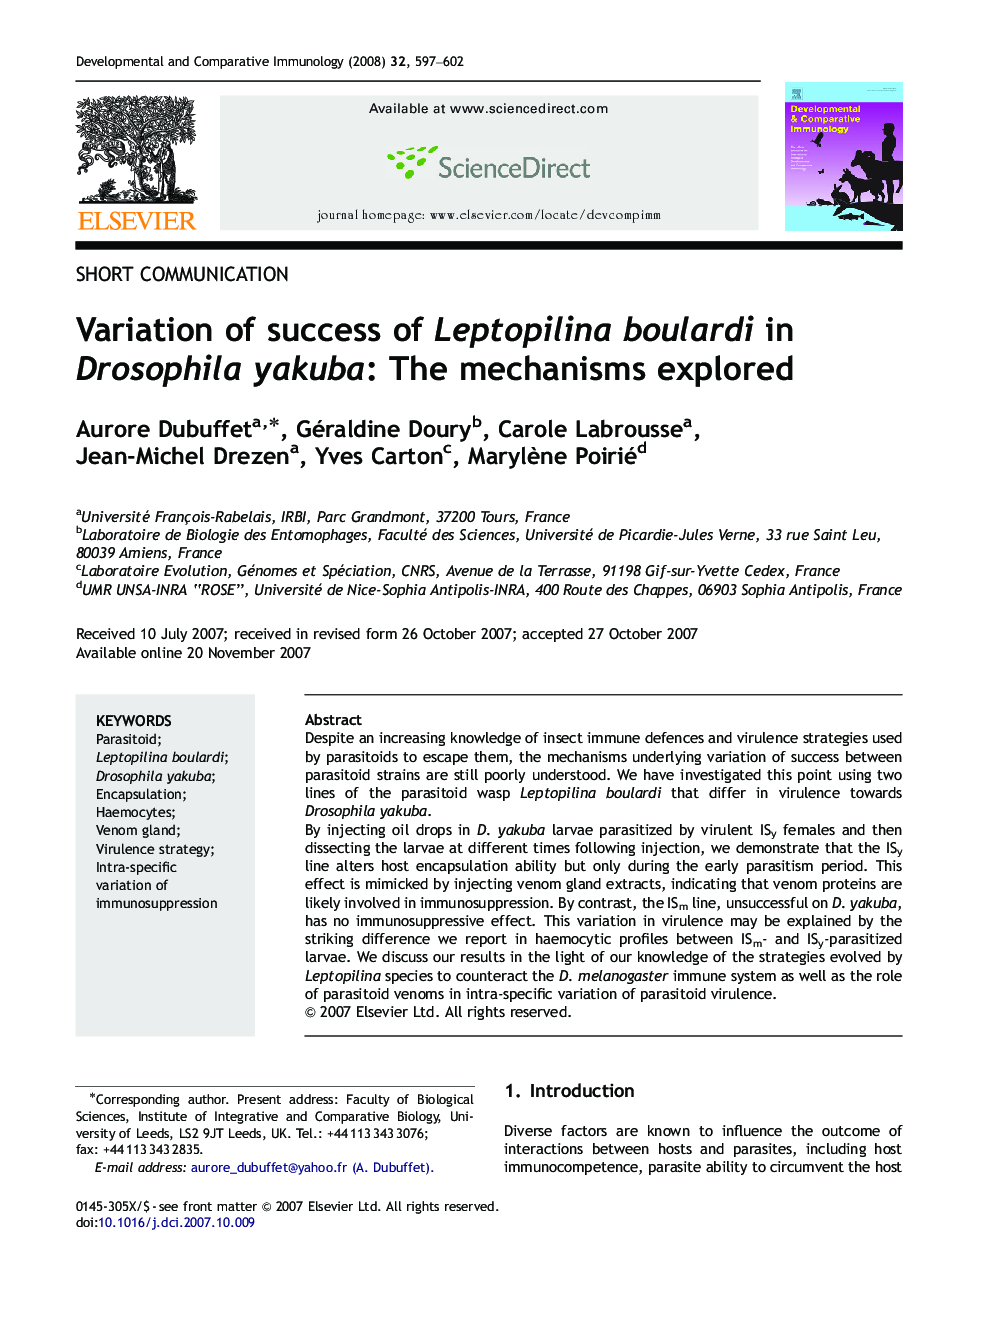 Variation of success of Leptopilina boulardi in Drosophila yakuba: The mechanisms explored